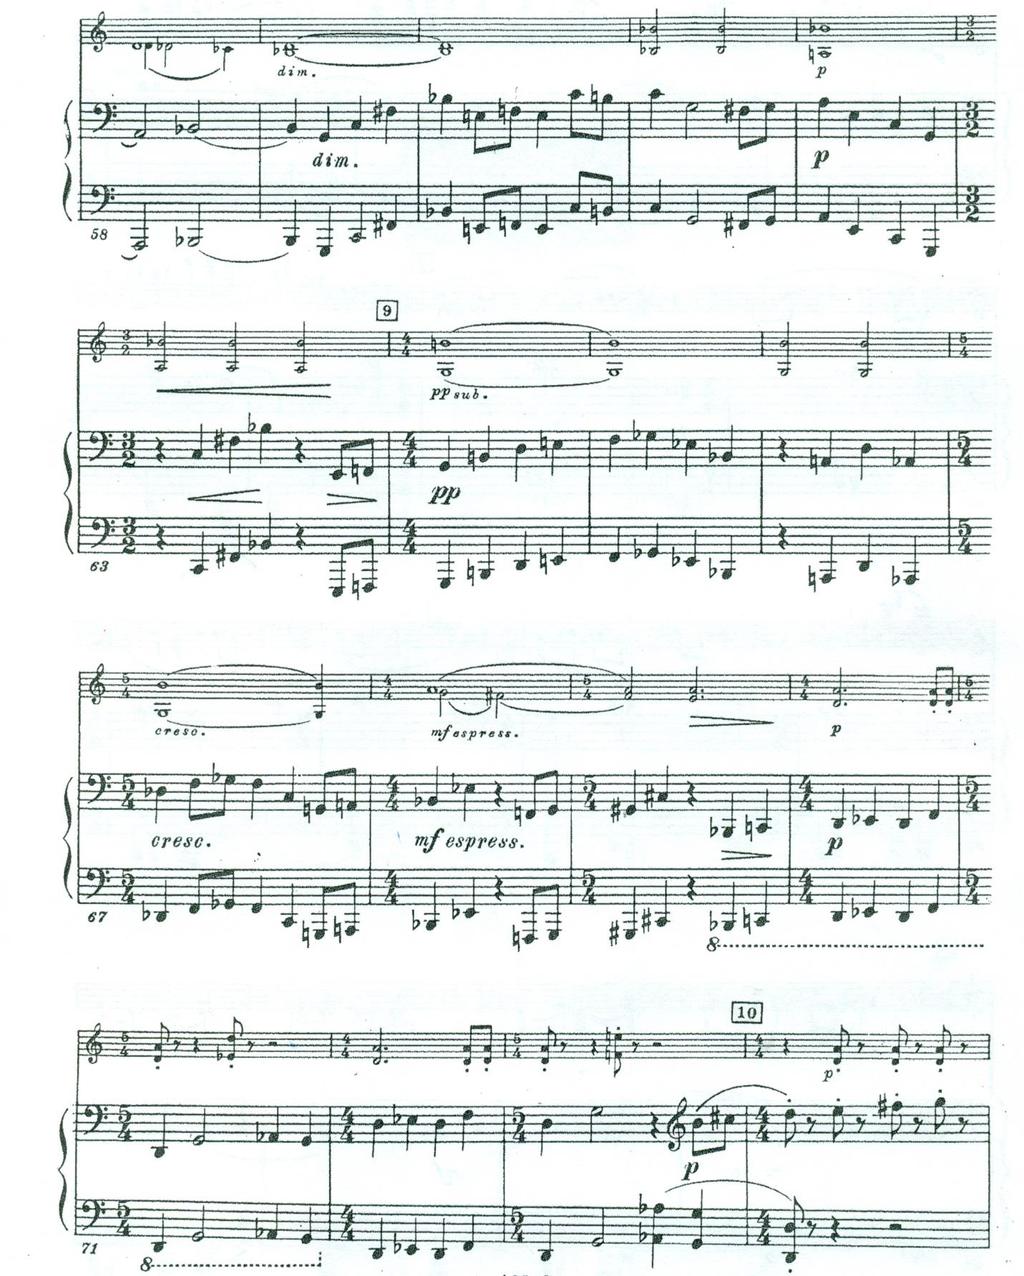 Example 4.15 Shostakovich, Violin Sonata, Op. 134, i, mm. 58-74 SONATA FOR VIOLIN AND PIANO, OP.